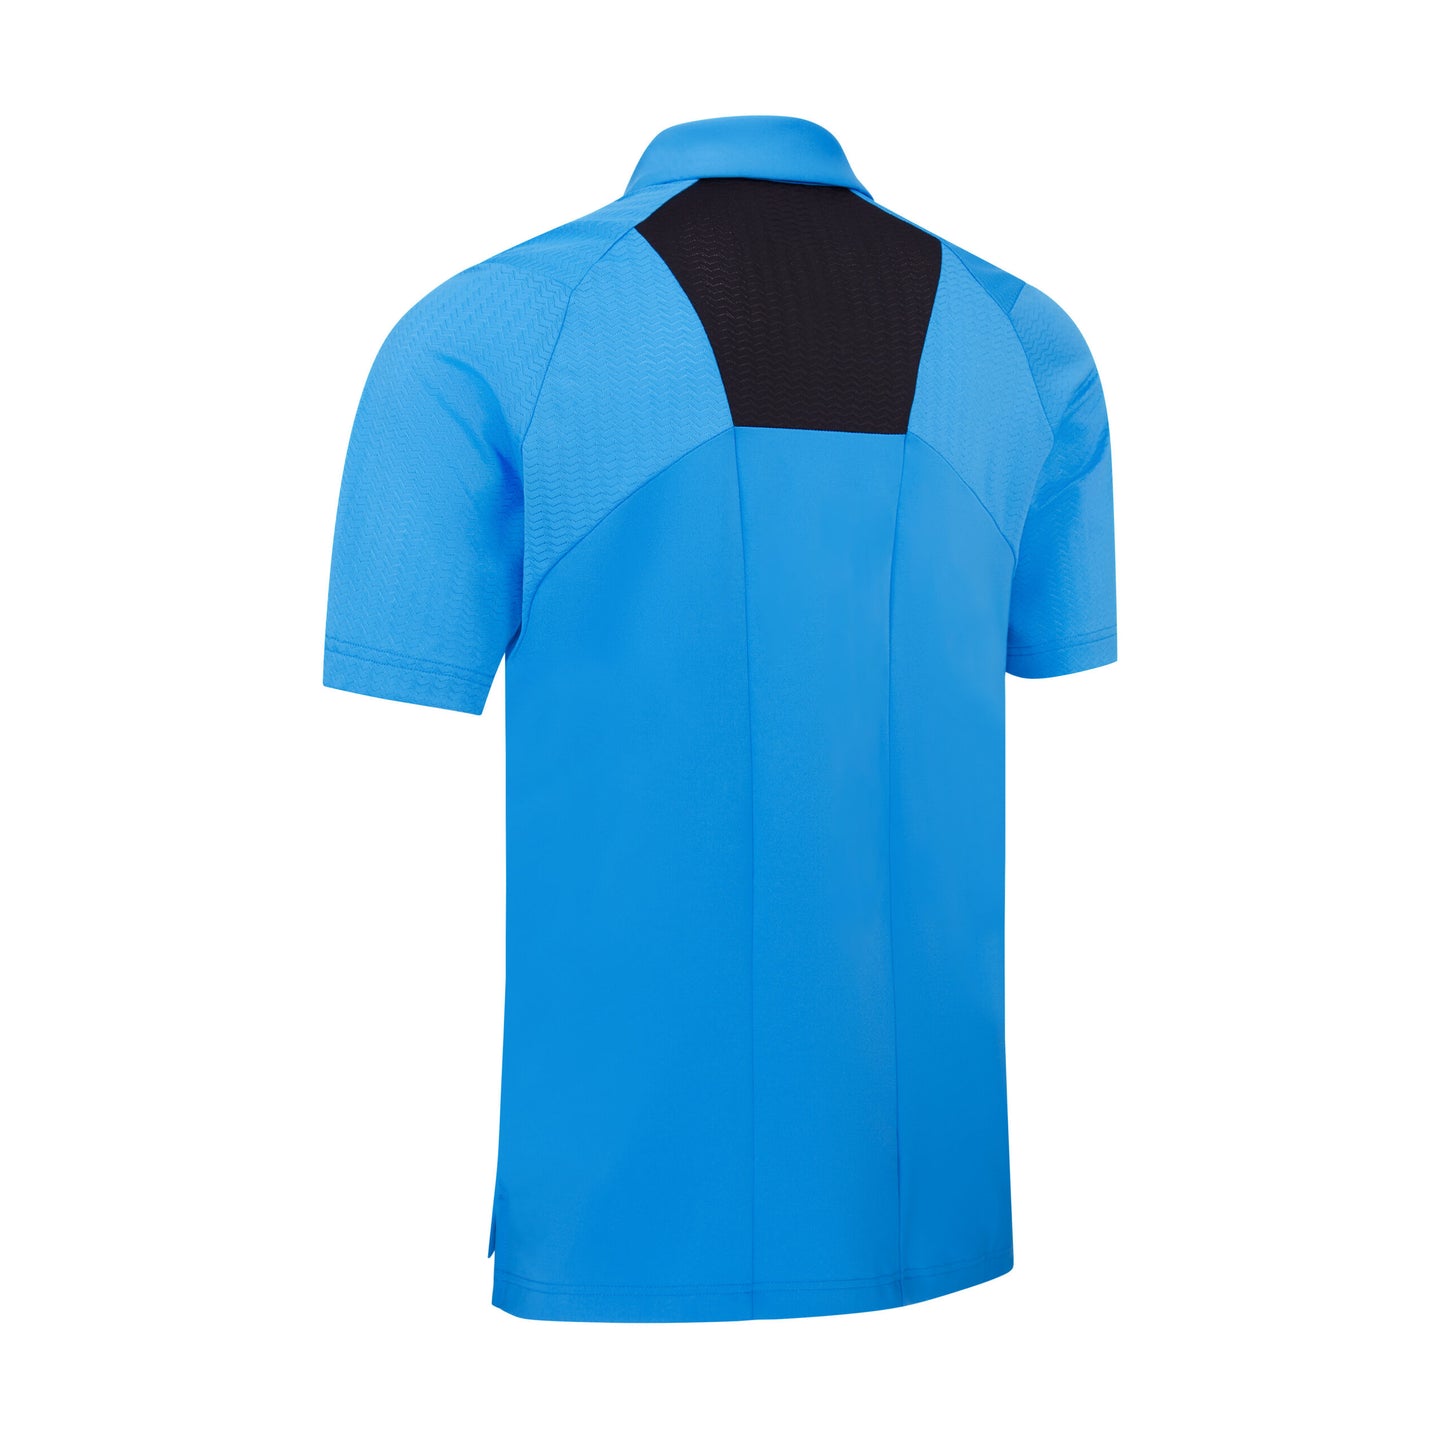 Callaway Golf Men's Odyssey Ventilated Block Polo Shirt - CGKSB074   